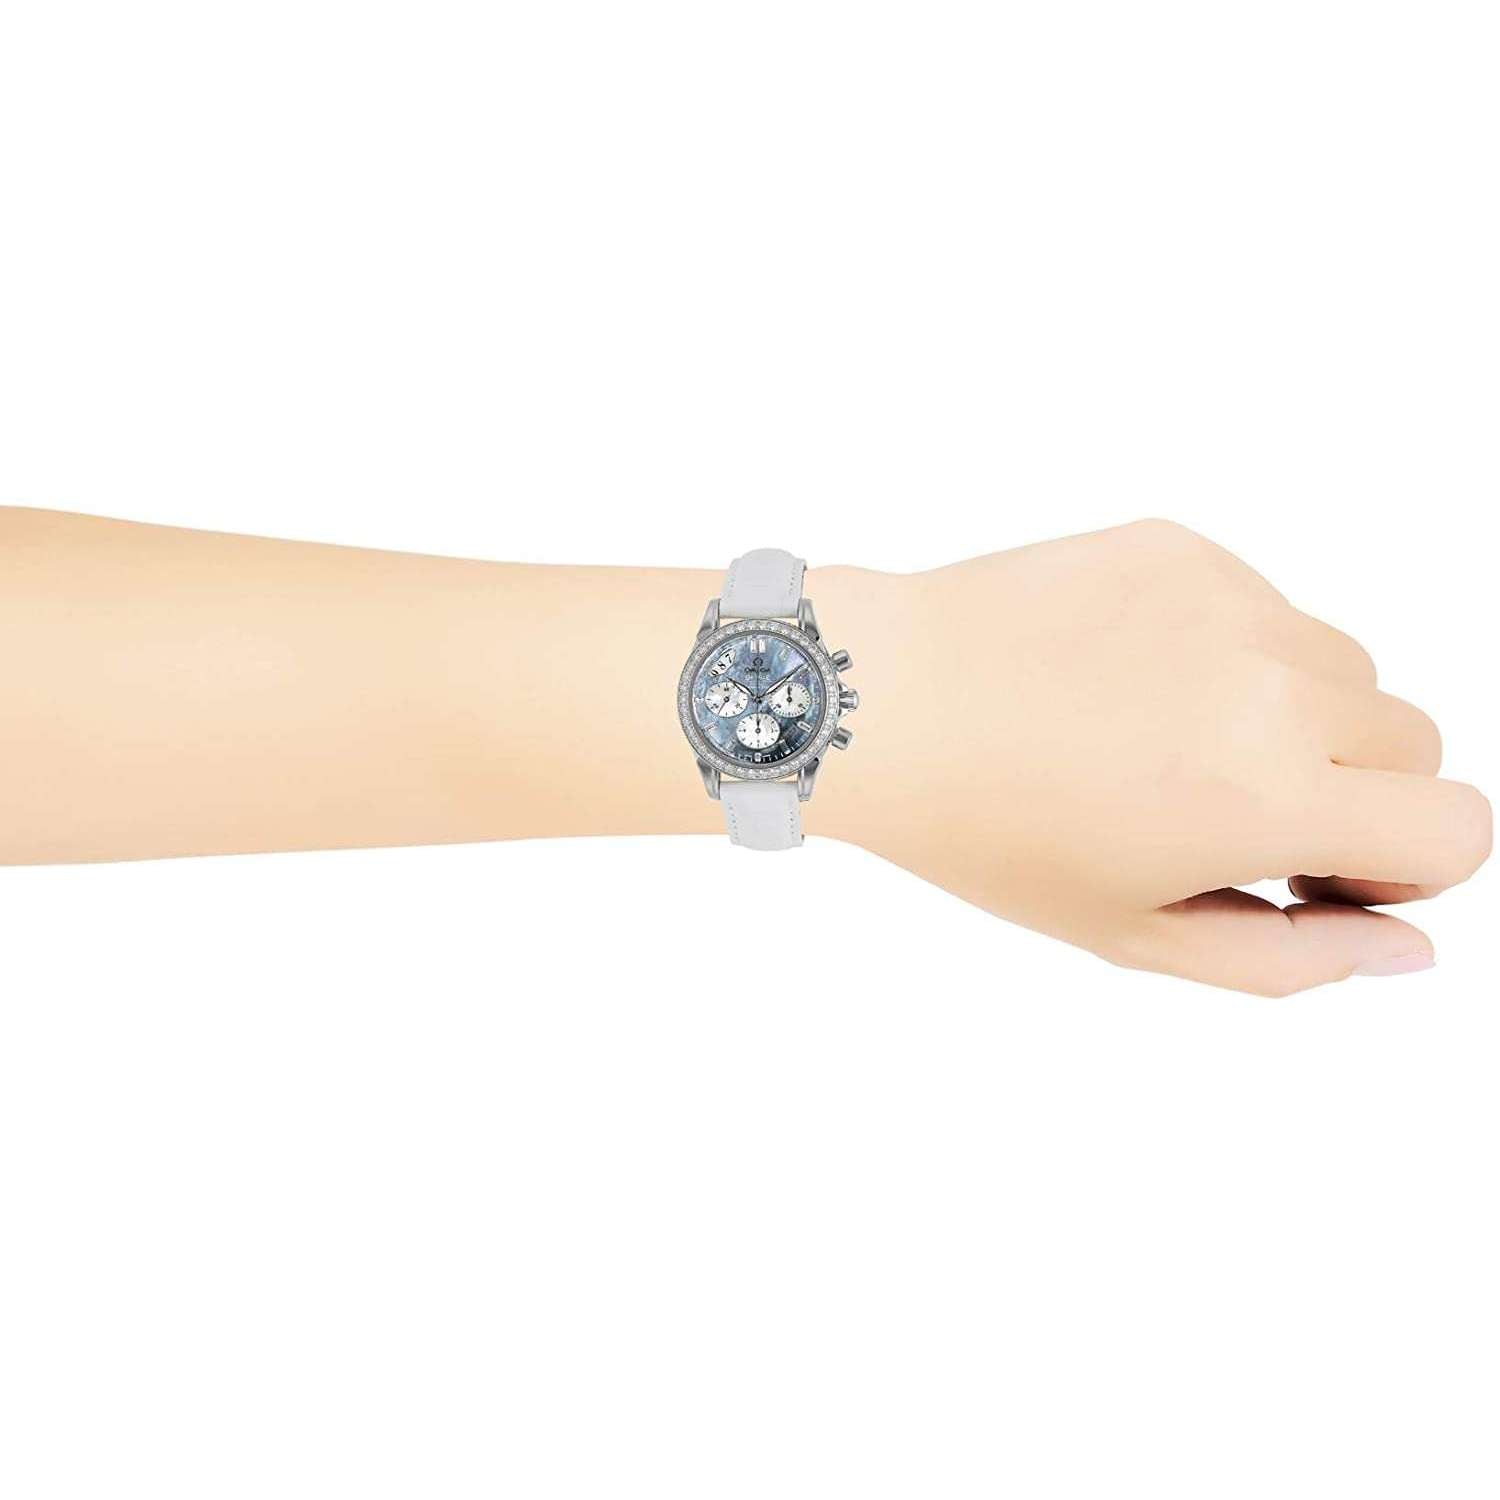 ROOK JAPAN:OMEGA DE VILLE CO-AXIAL CHRONOMETER 35 MM WOMEN WATCH 4679.72.36,Luxury Watch,Omega